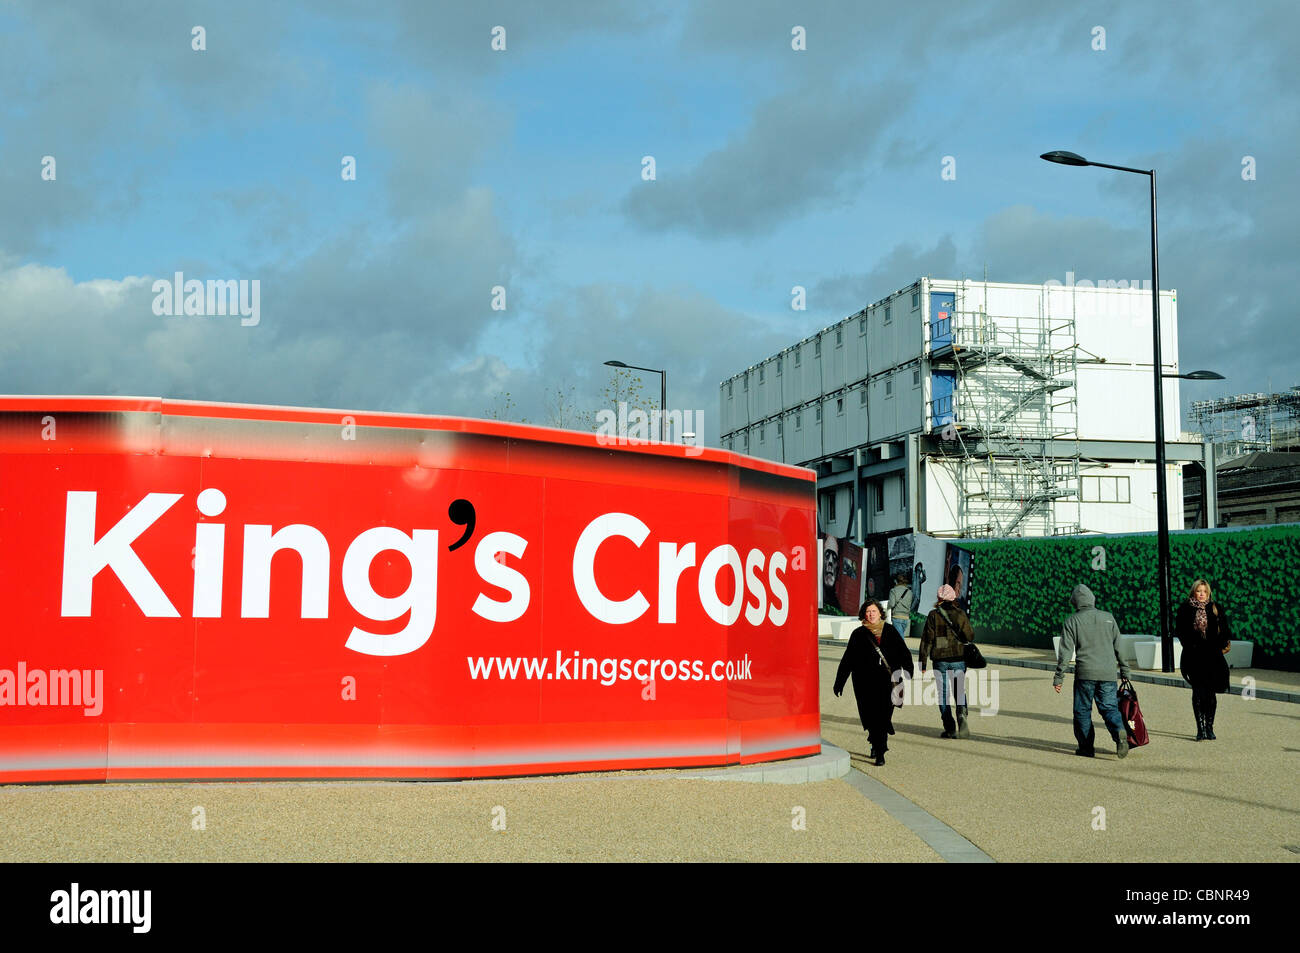 Kings Cross auf roten Werbetafeln, Kings Cross zentrale Entwicklung vor Ort, Ecke des Königs Boulevard gedruckt London N1C England UK Stockfoto